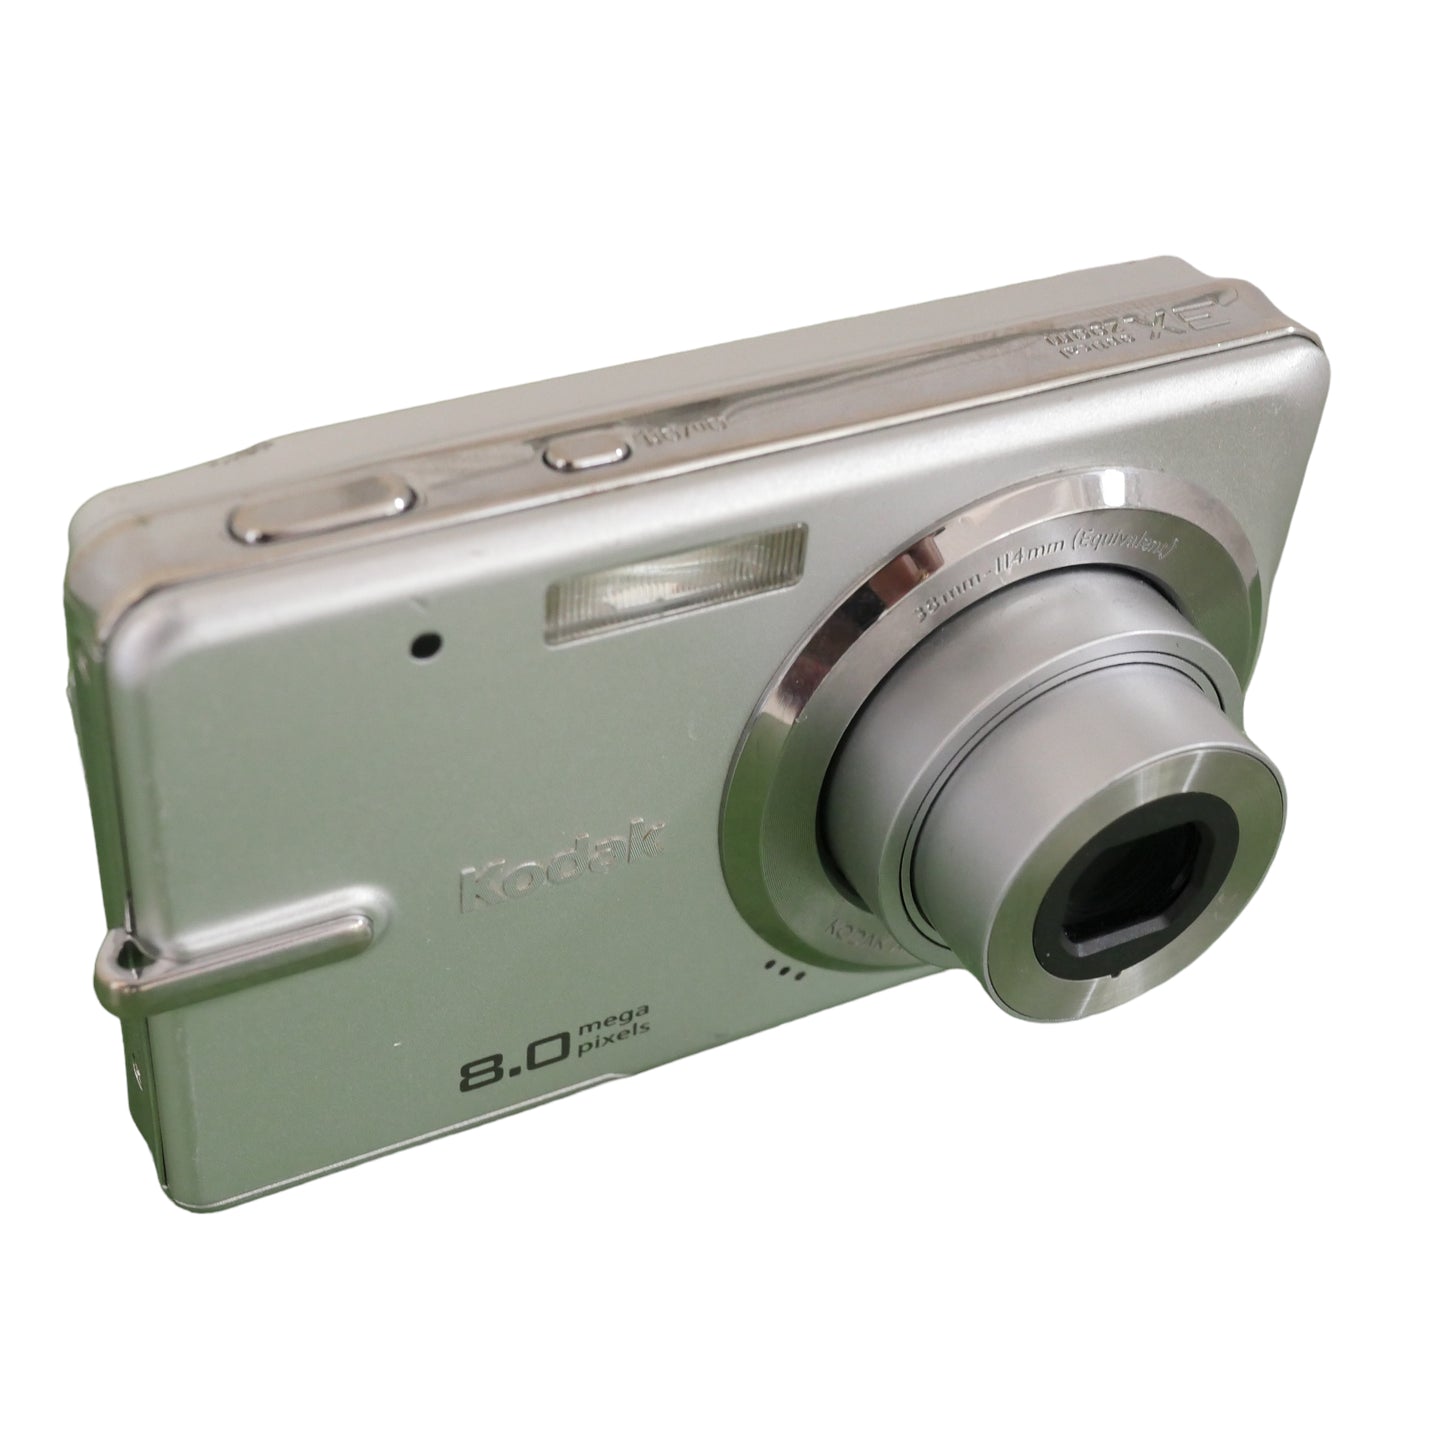 Kodak Easyshare M883 - 8.0 Megapixel Digital Camera